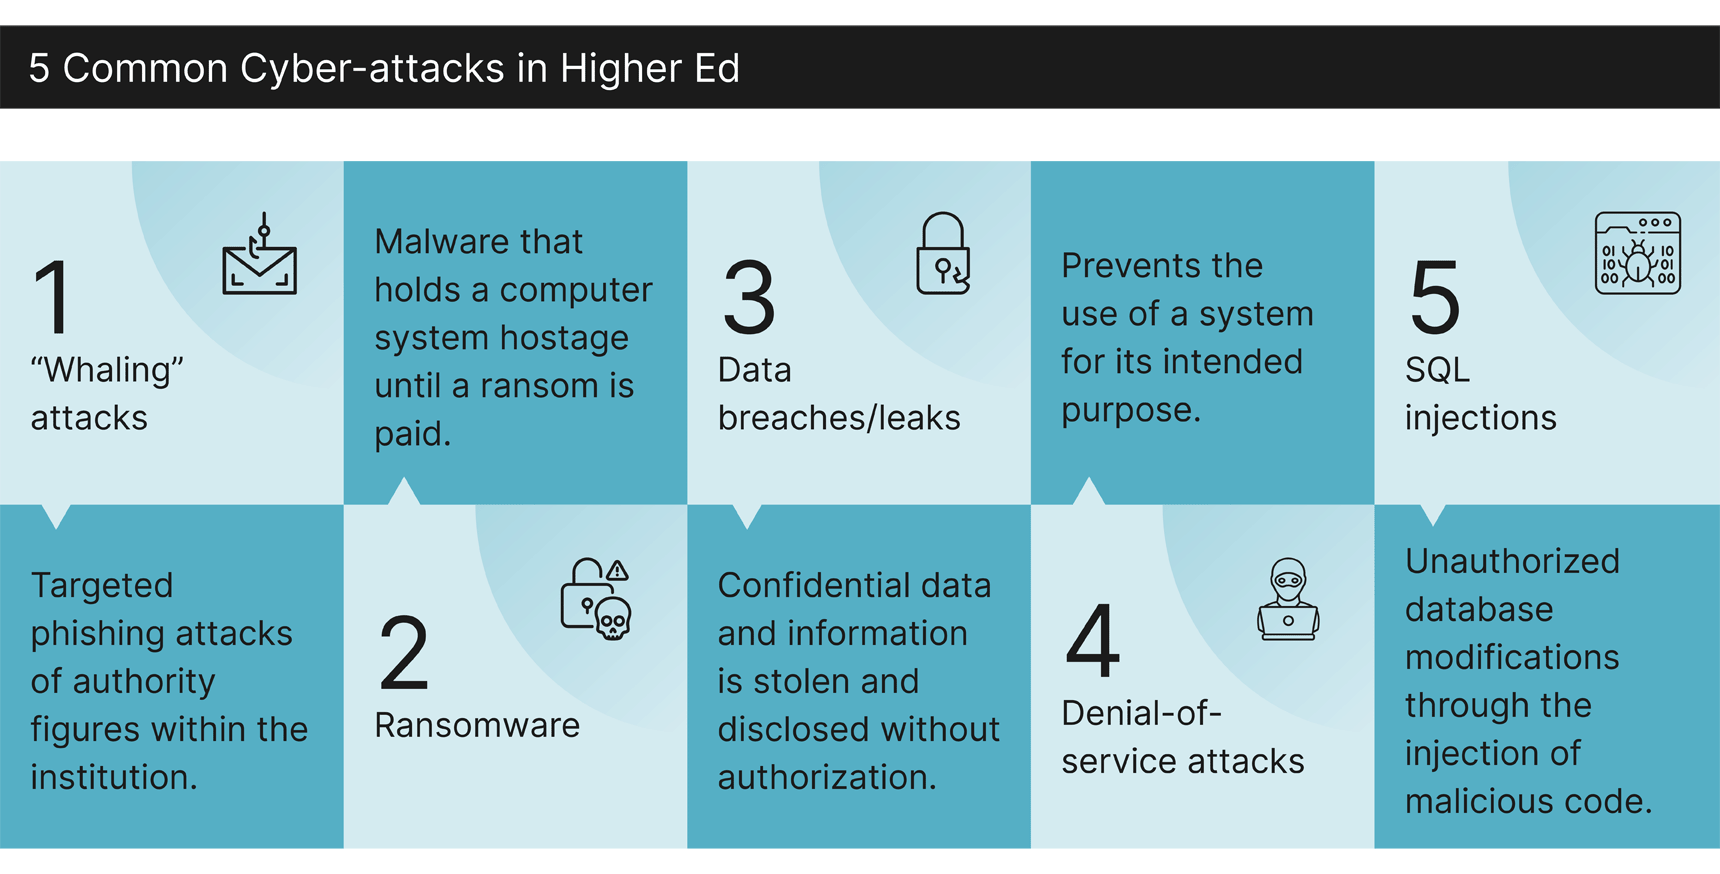 School Cyberattacks, Explained